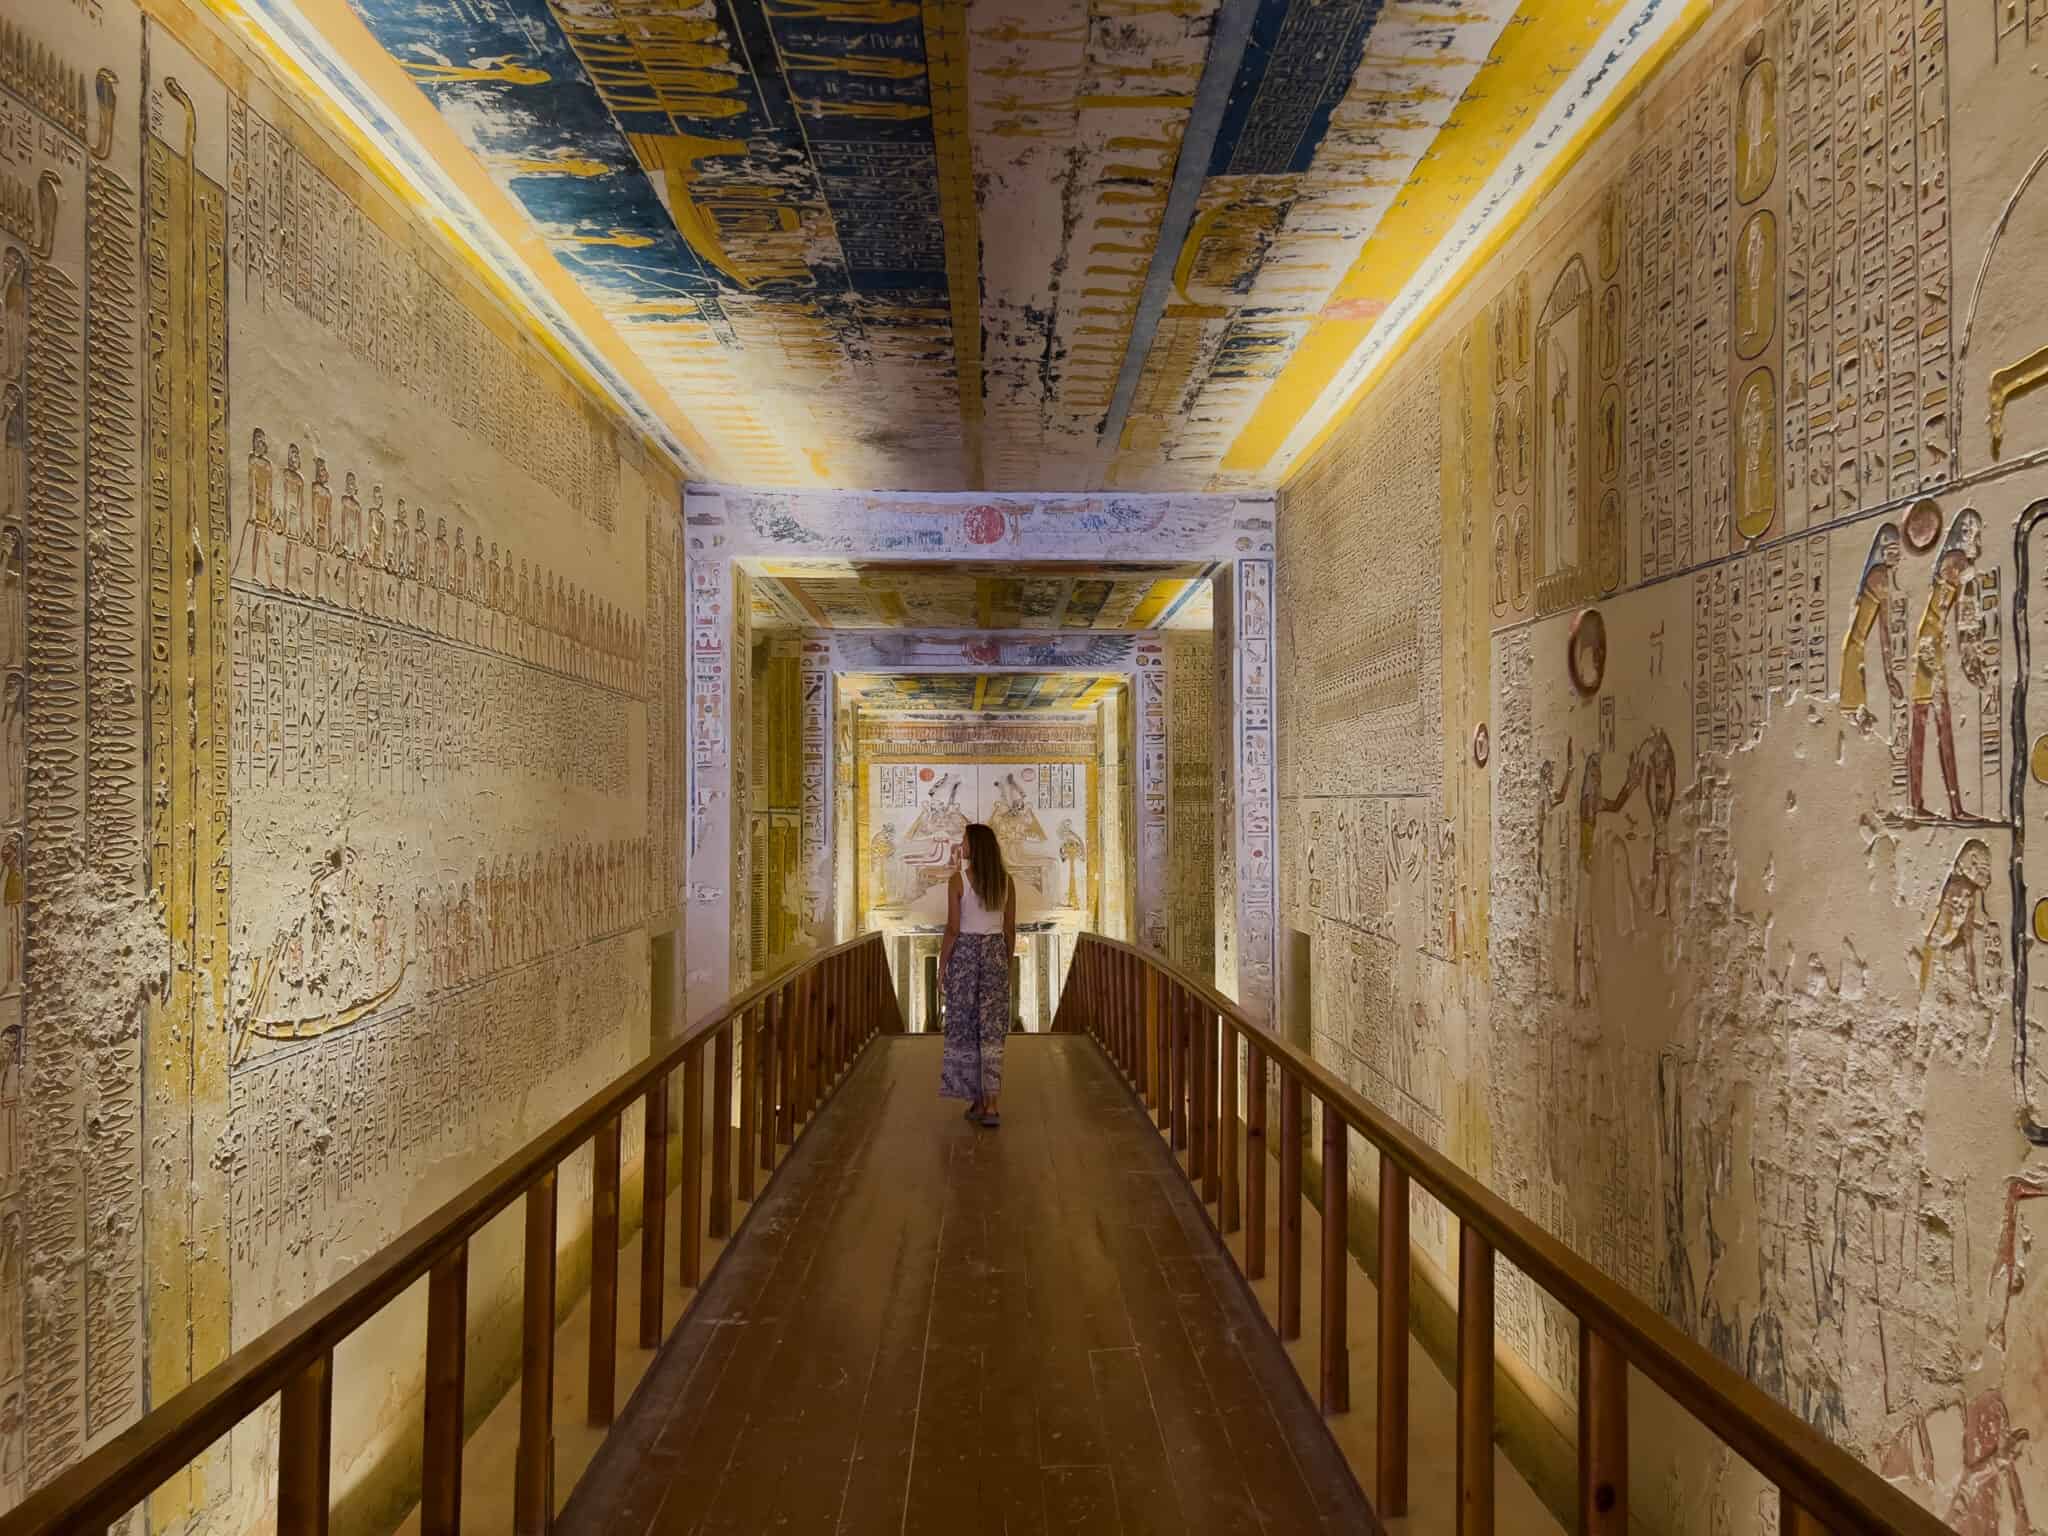 A woman is walking down a hallway in Luxor, Egypt.